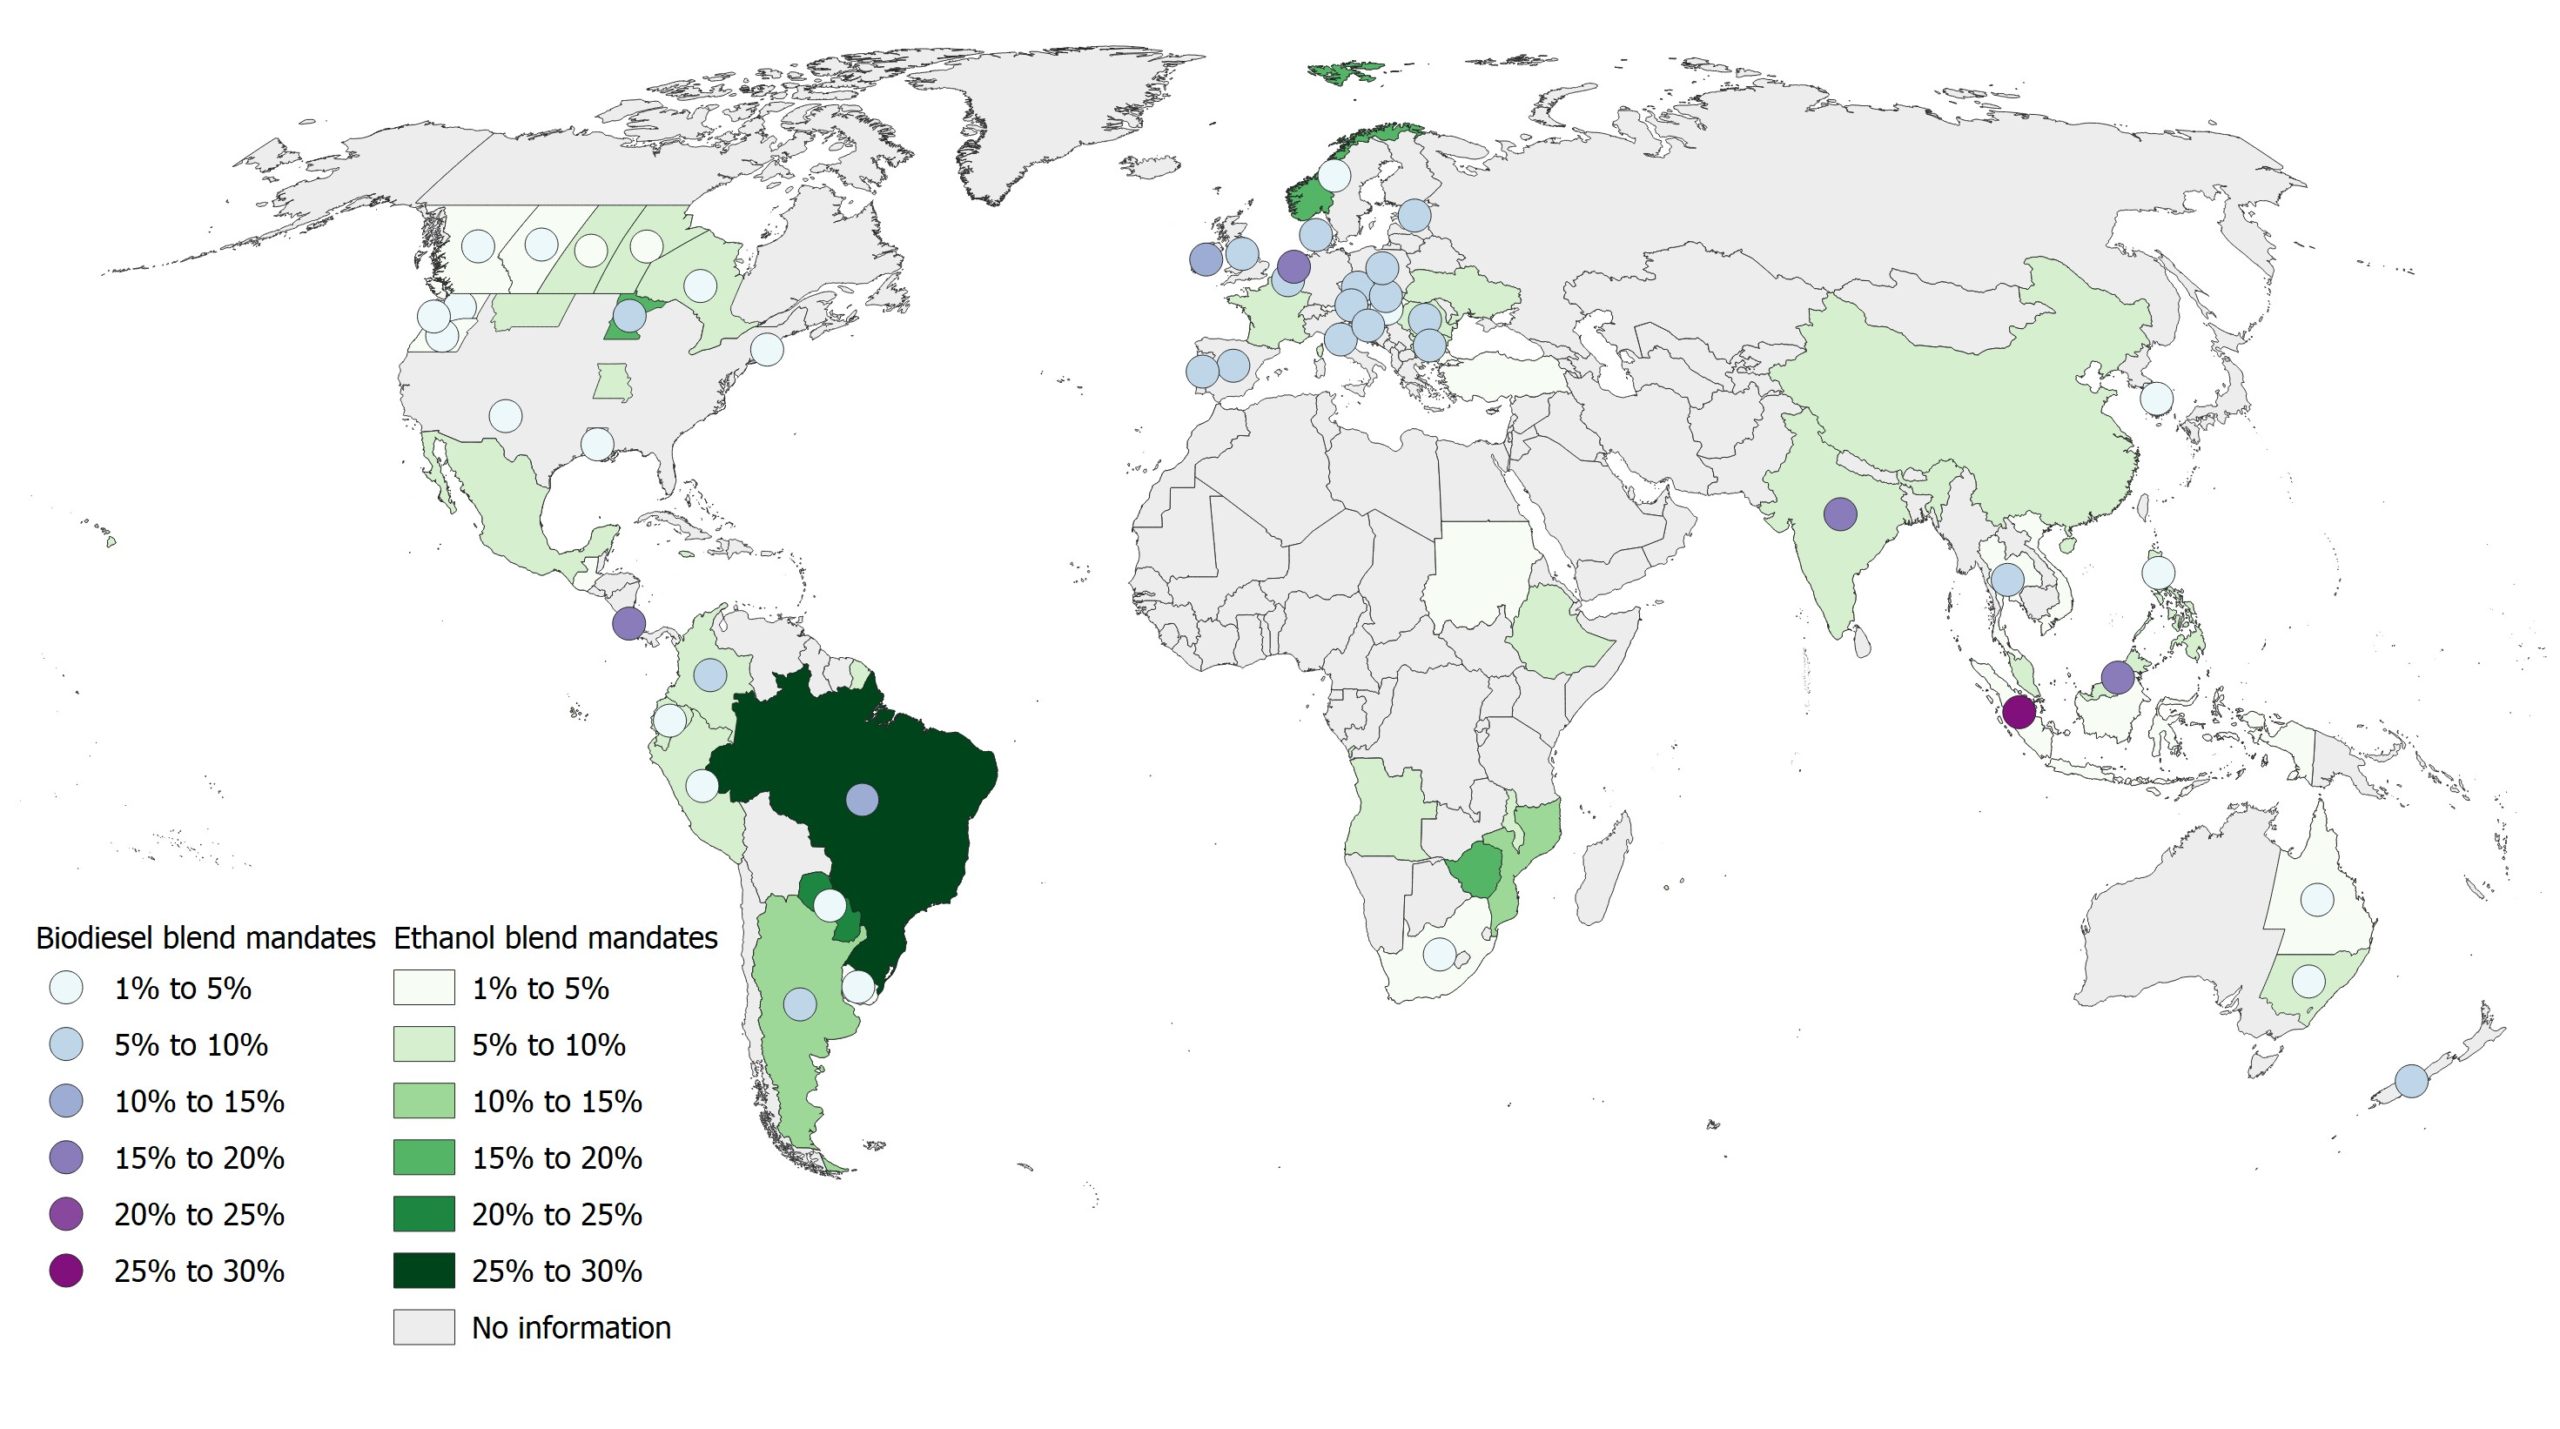 Biofuel blending mandates worldwide, by blend level, as of 2020